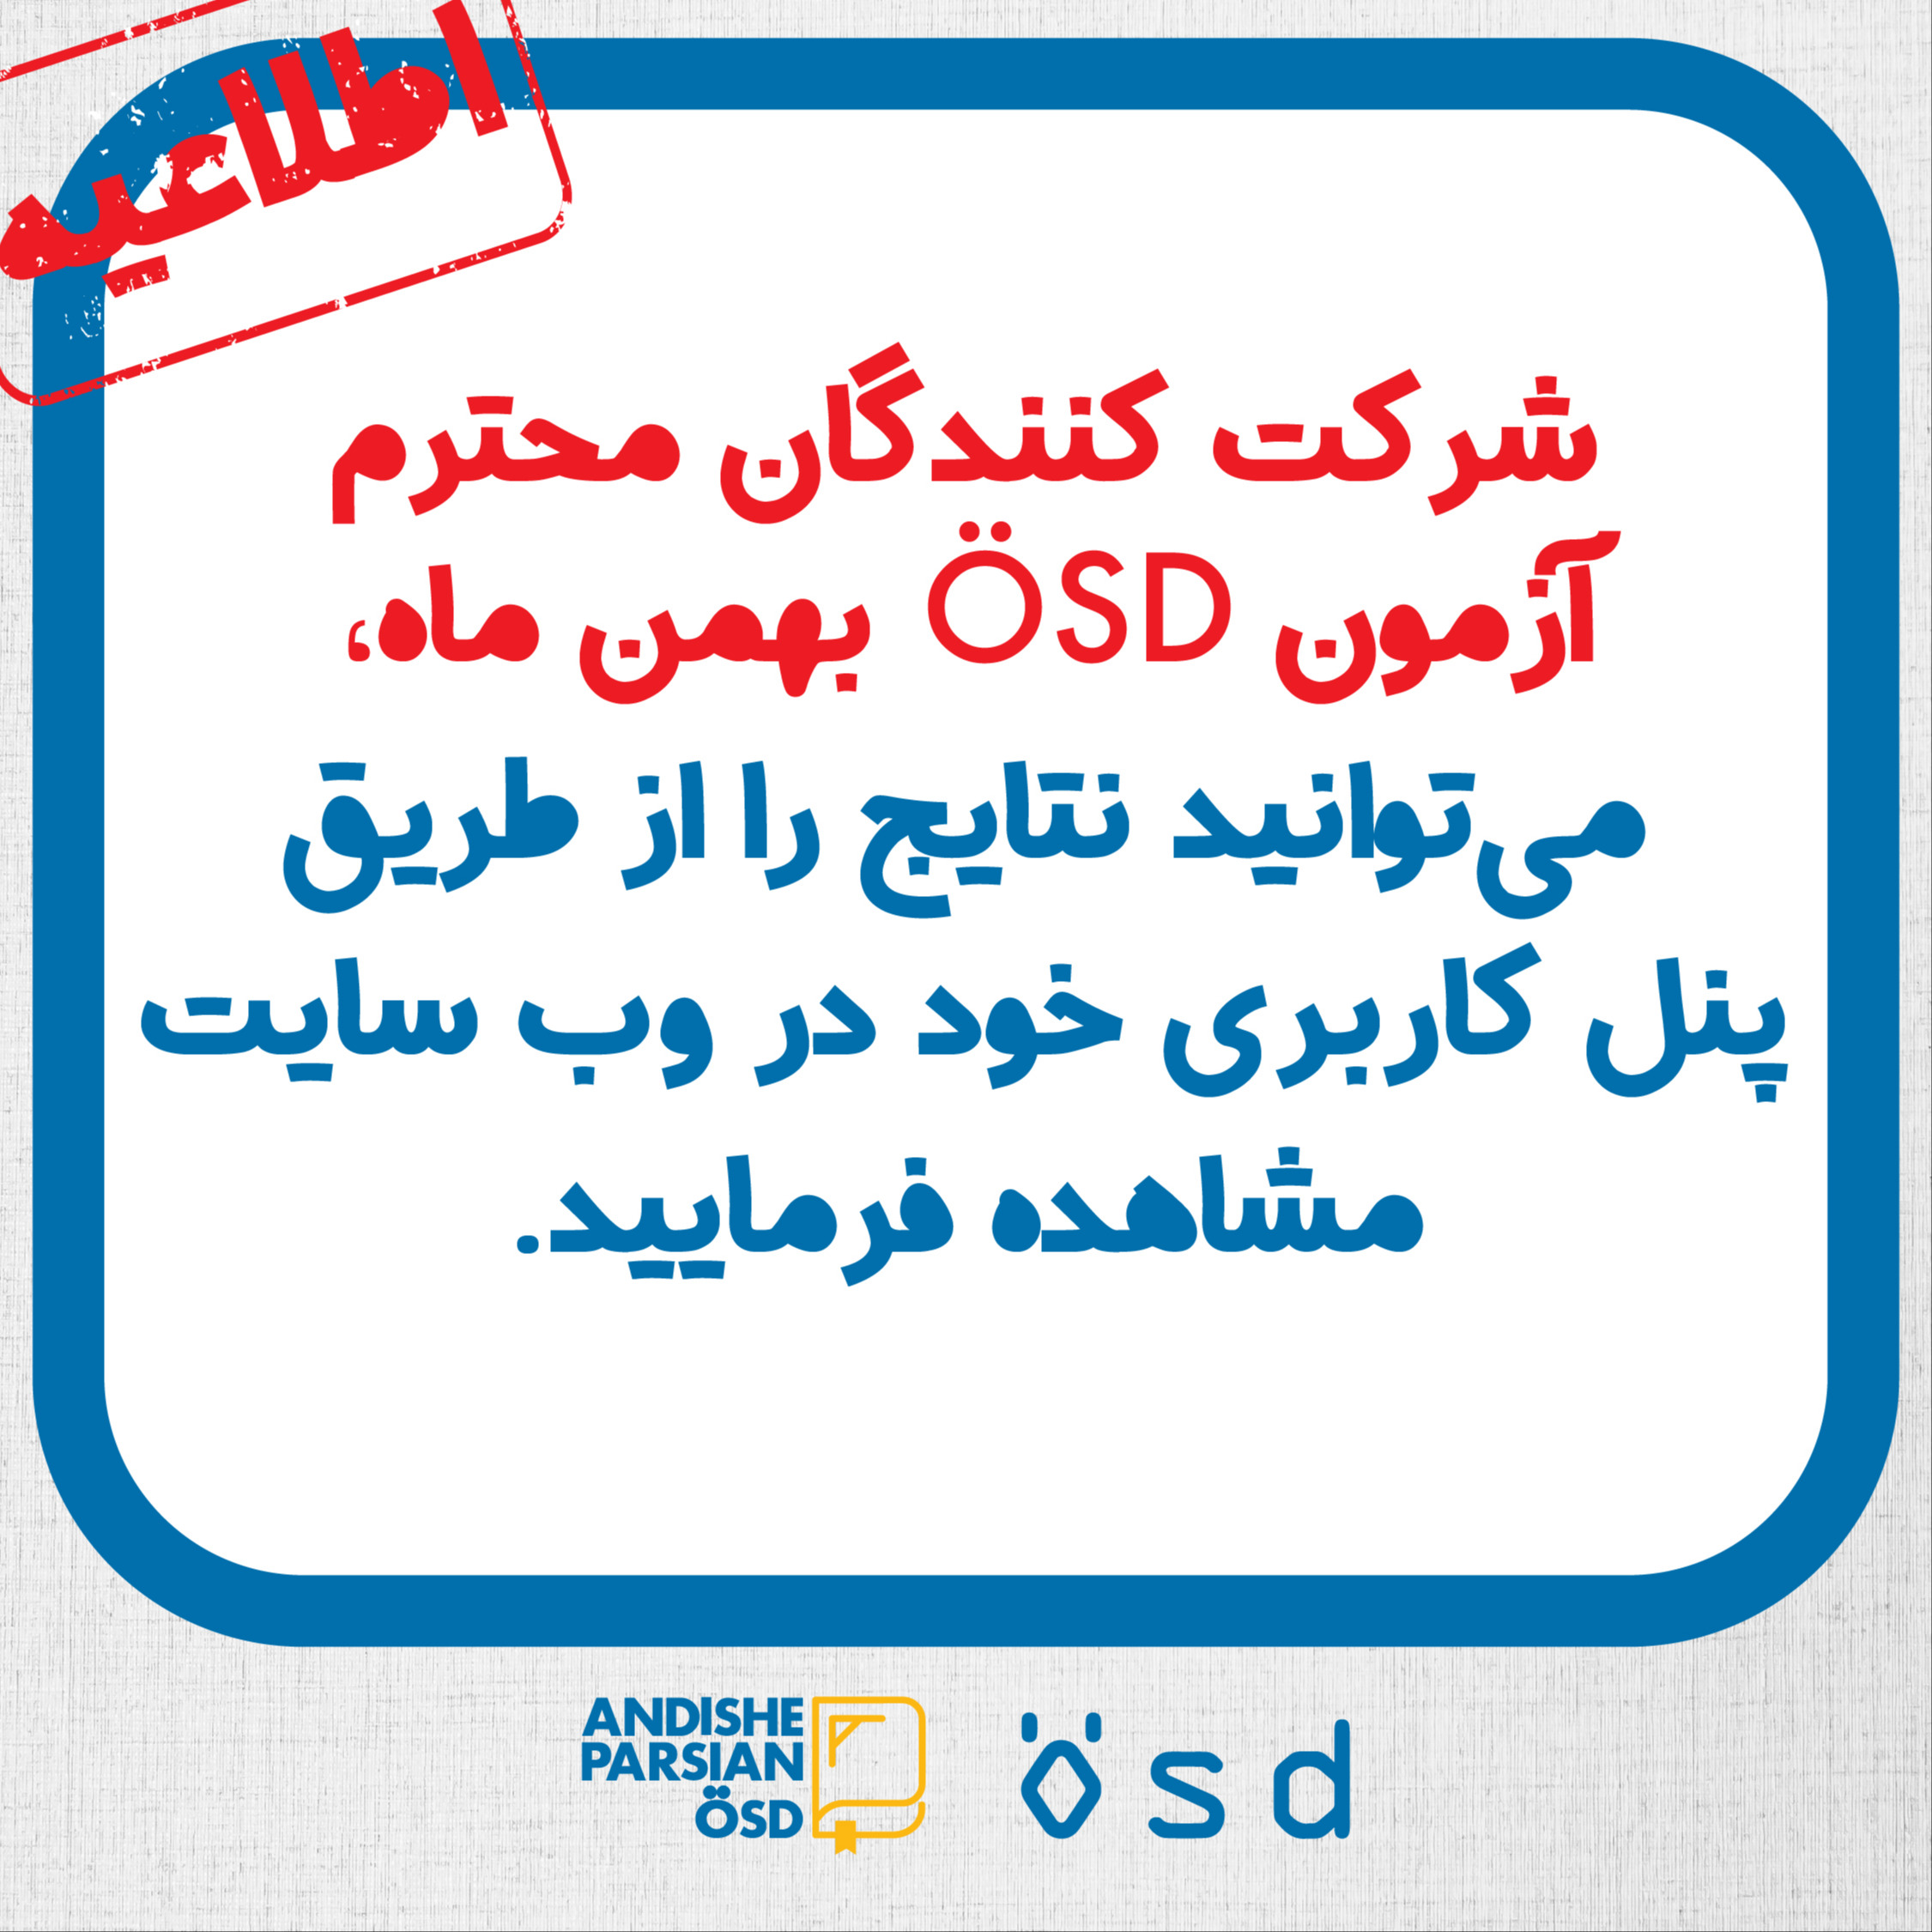 اعلام نتایج آزمون ÖSD  بهمن ماه